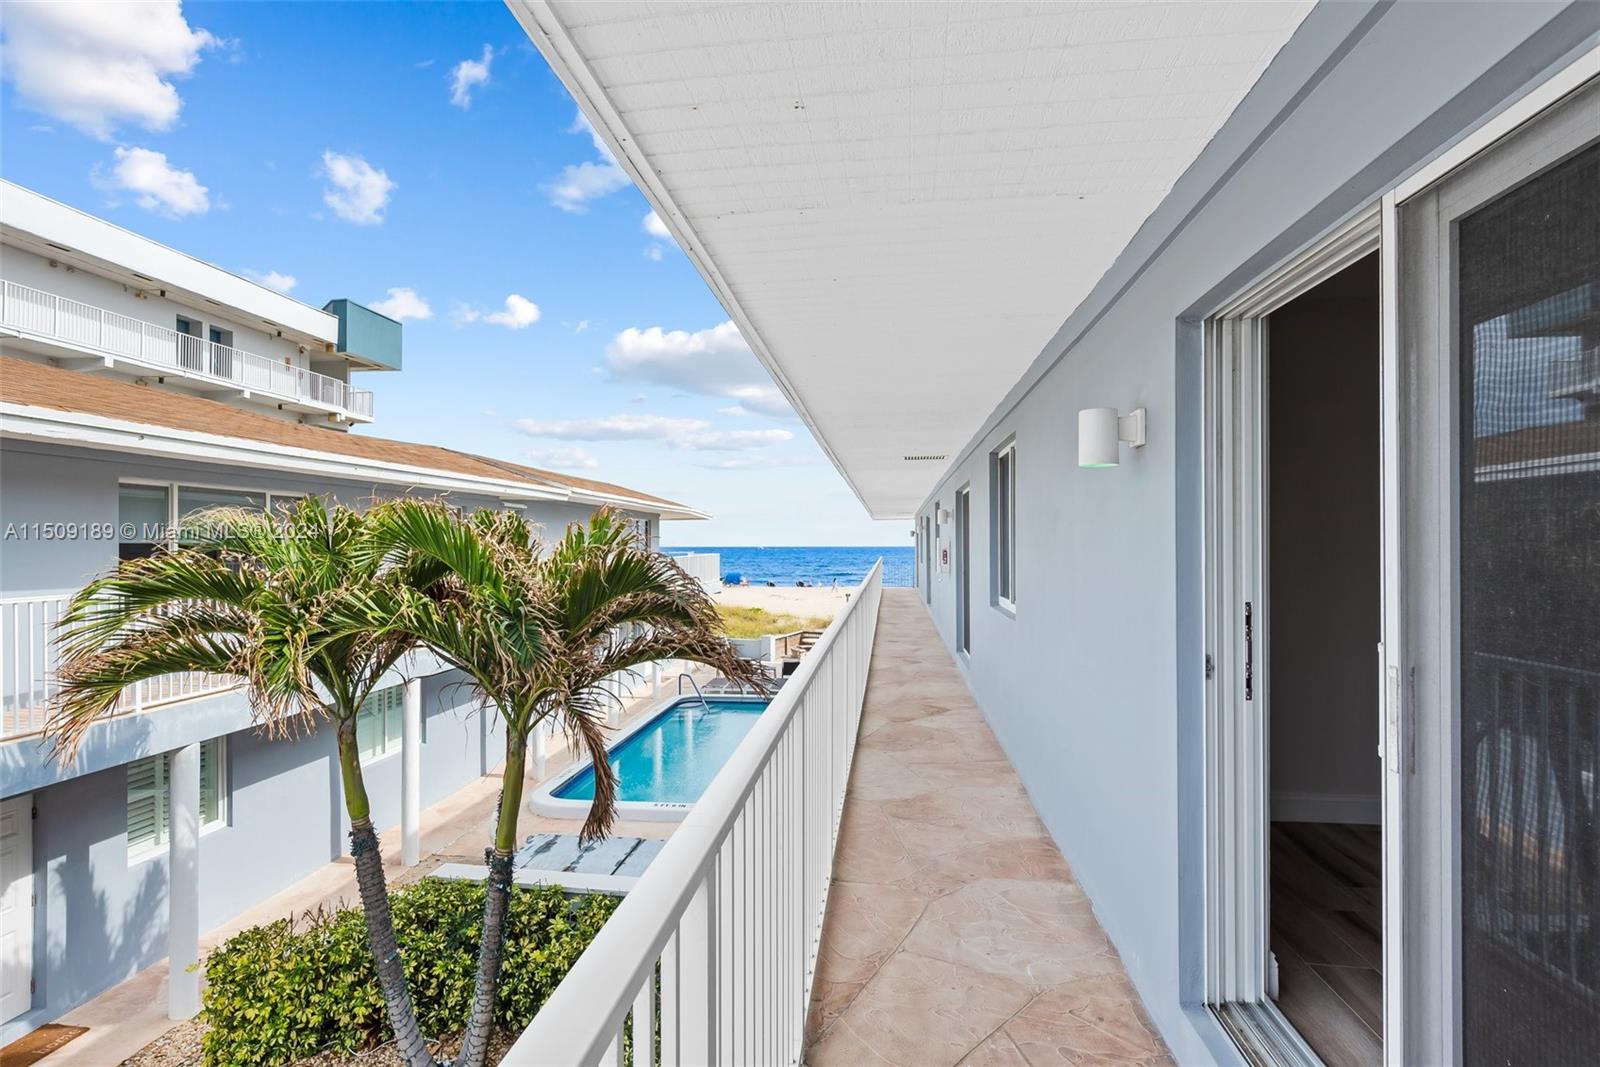 Property for Sale at 600 N Ocean Blvd Blvd 4A, Pompano Beach, Broward County, Florida - Bedrooms: 2 
Bathrooms: 3  - $599,000